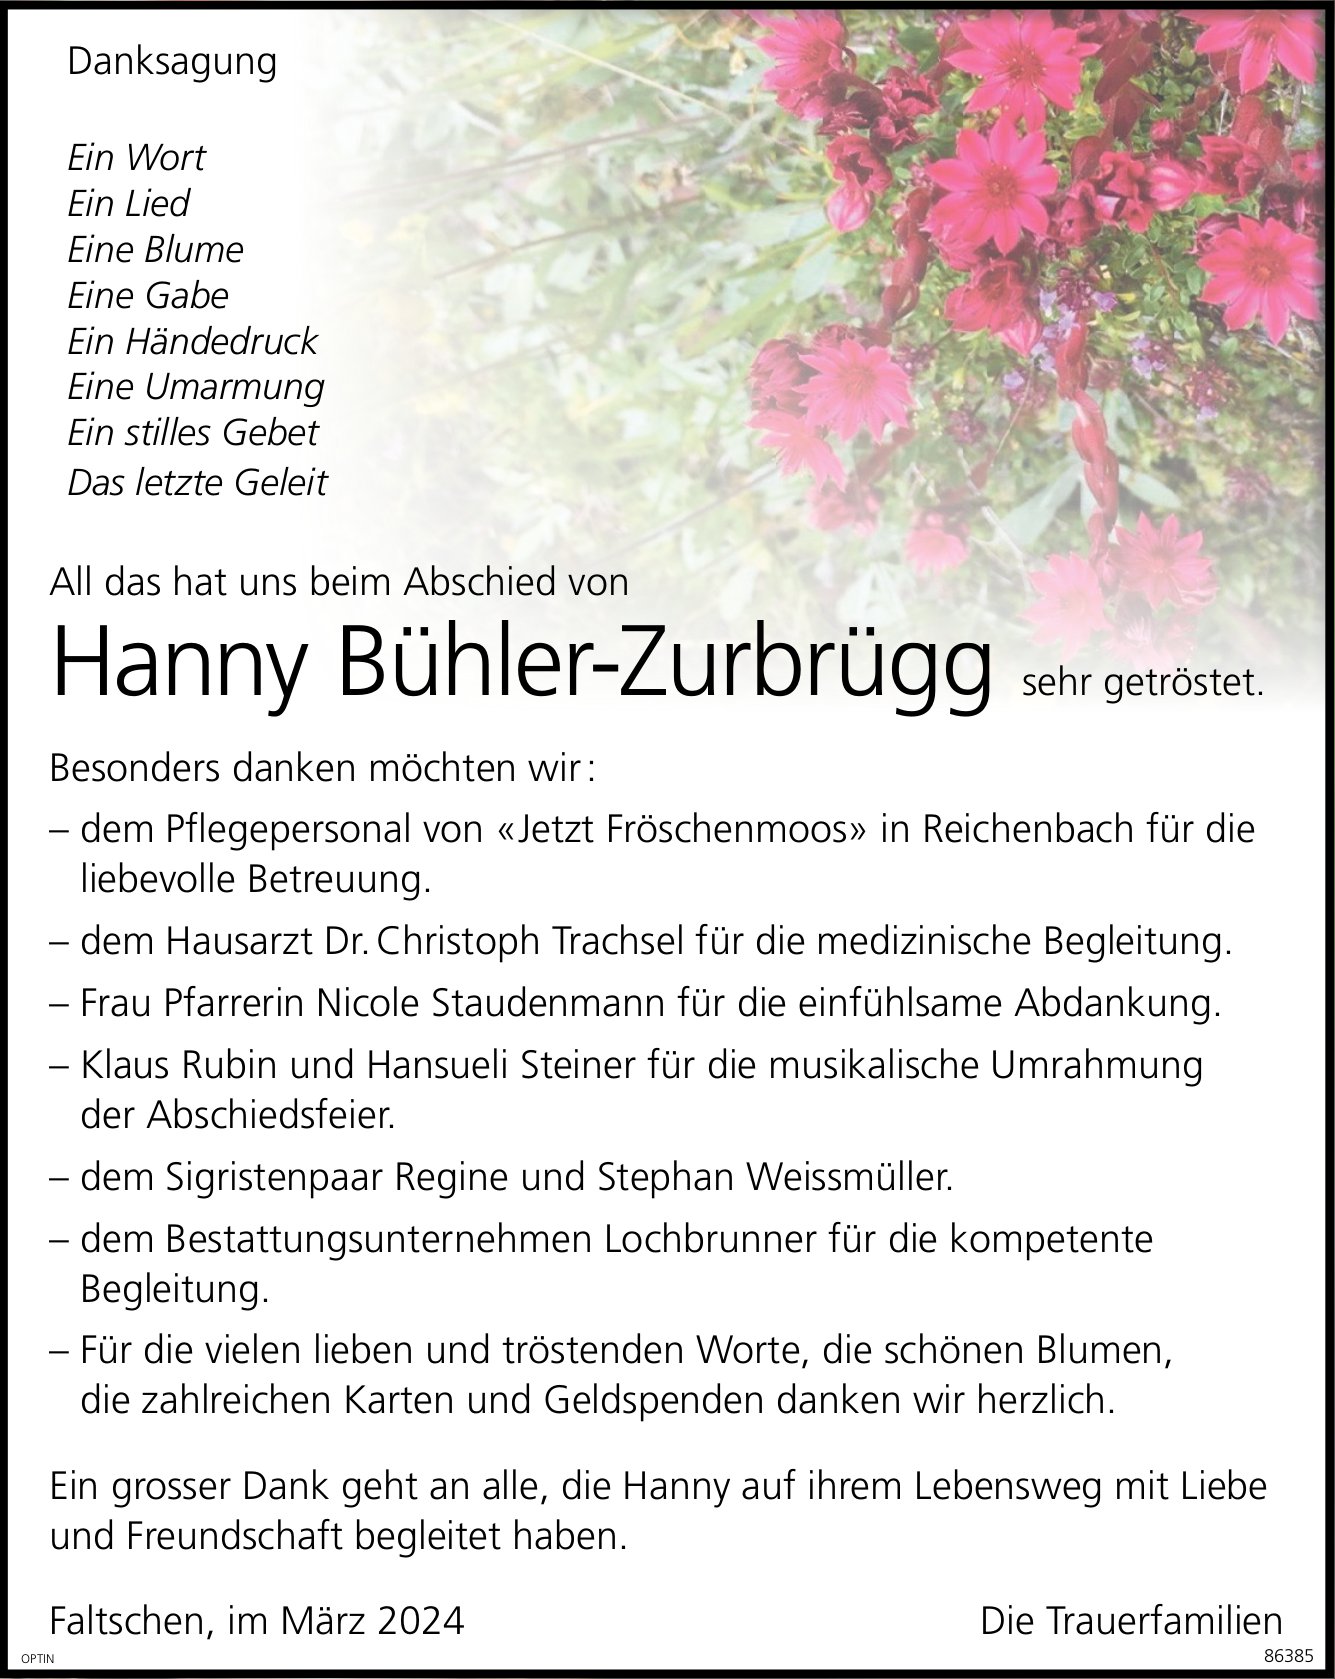 Hanny Bühler-Zurbrügg sehr getröstet., im April 2024 / DS